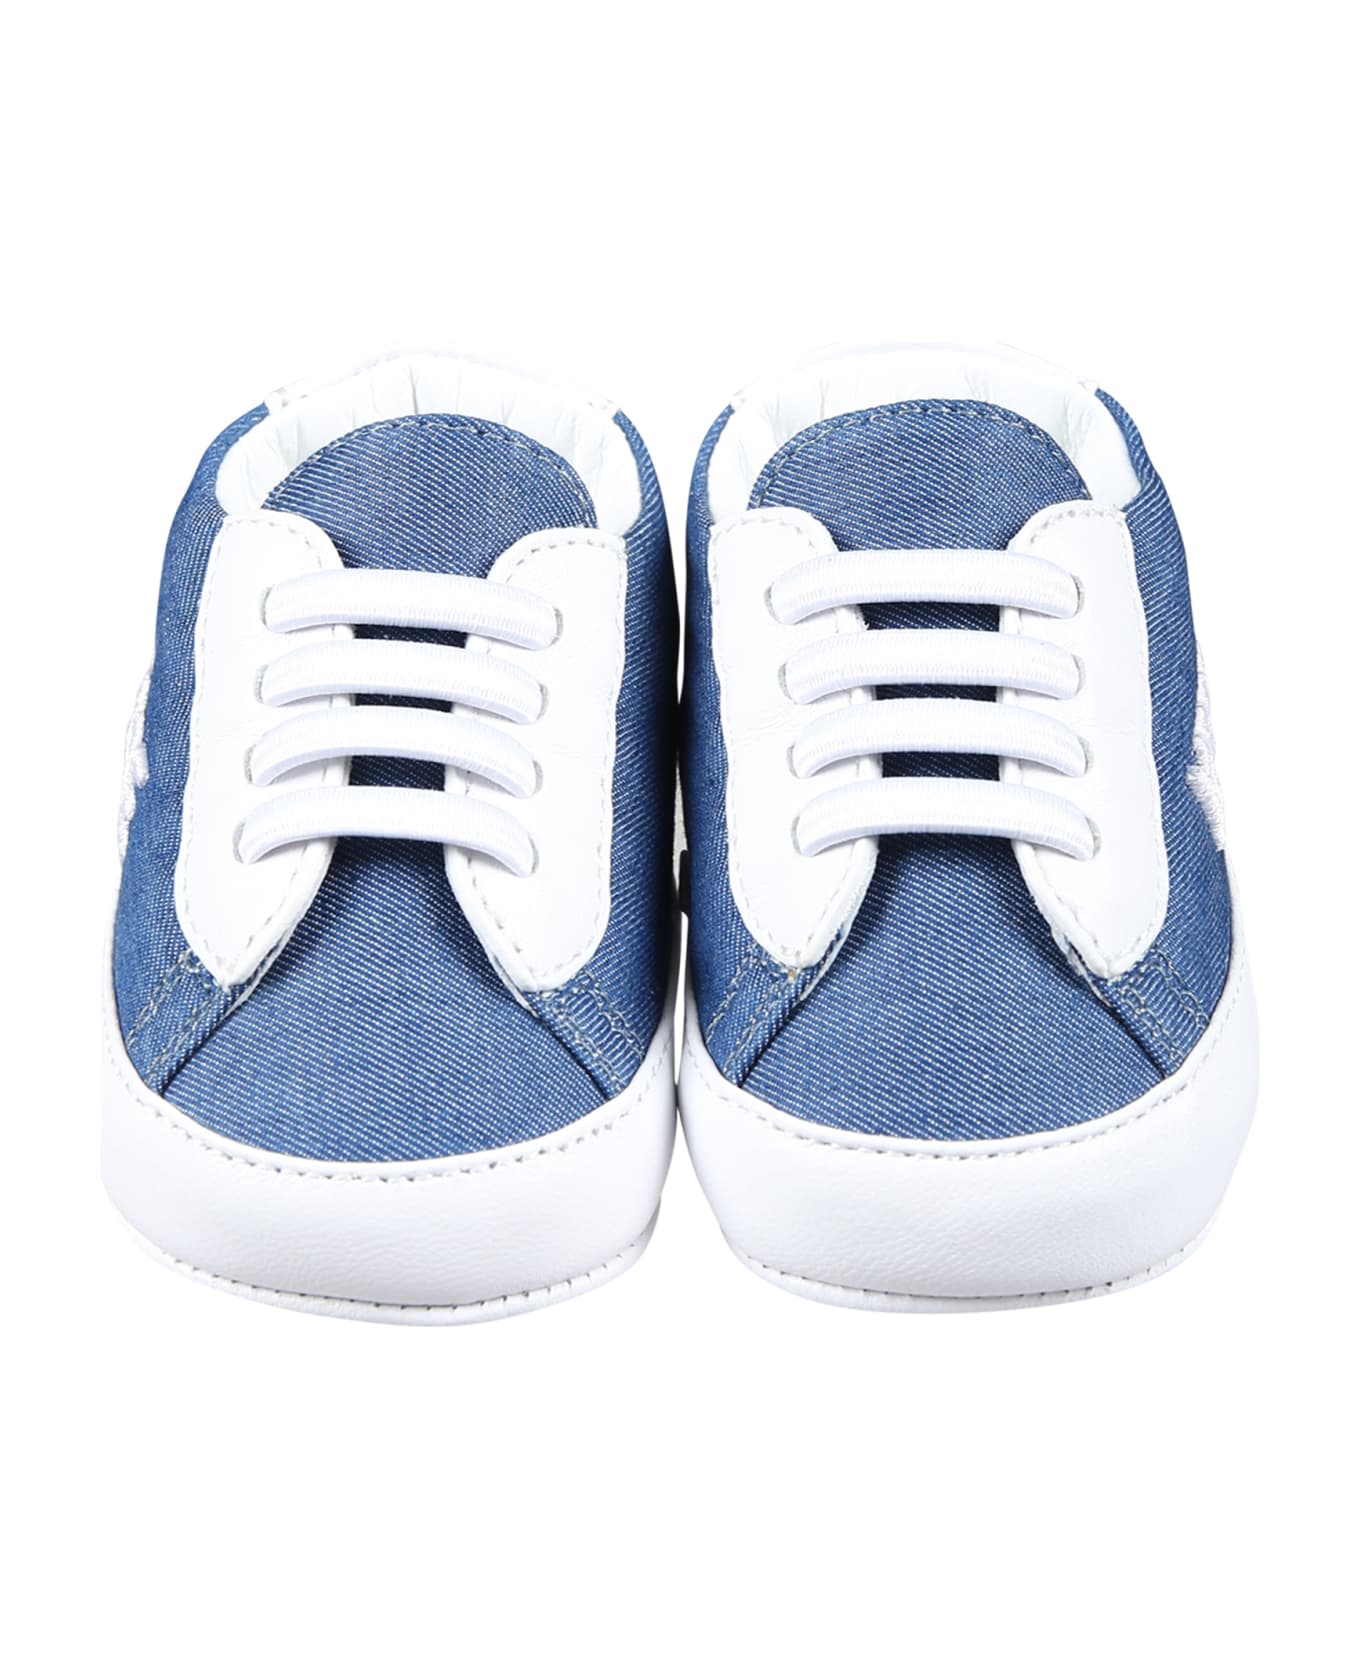 Versace Denim Sneakers For Babies With Logo - Denim シューズ